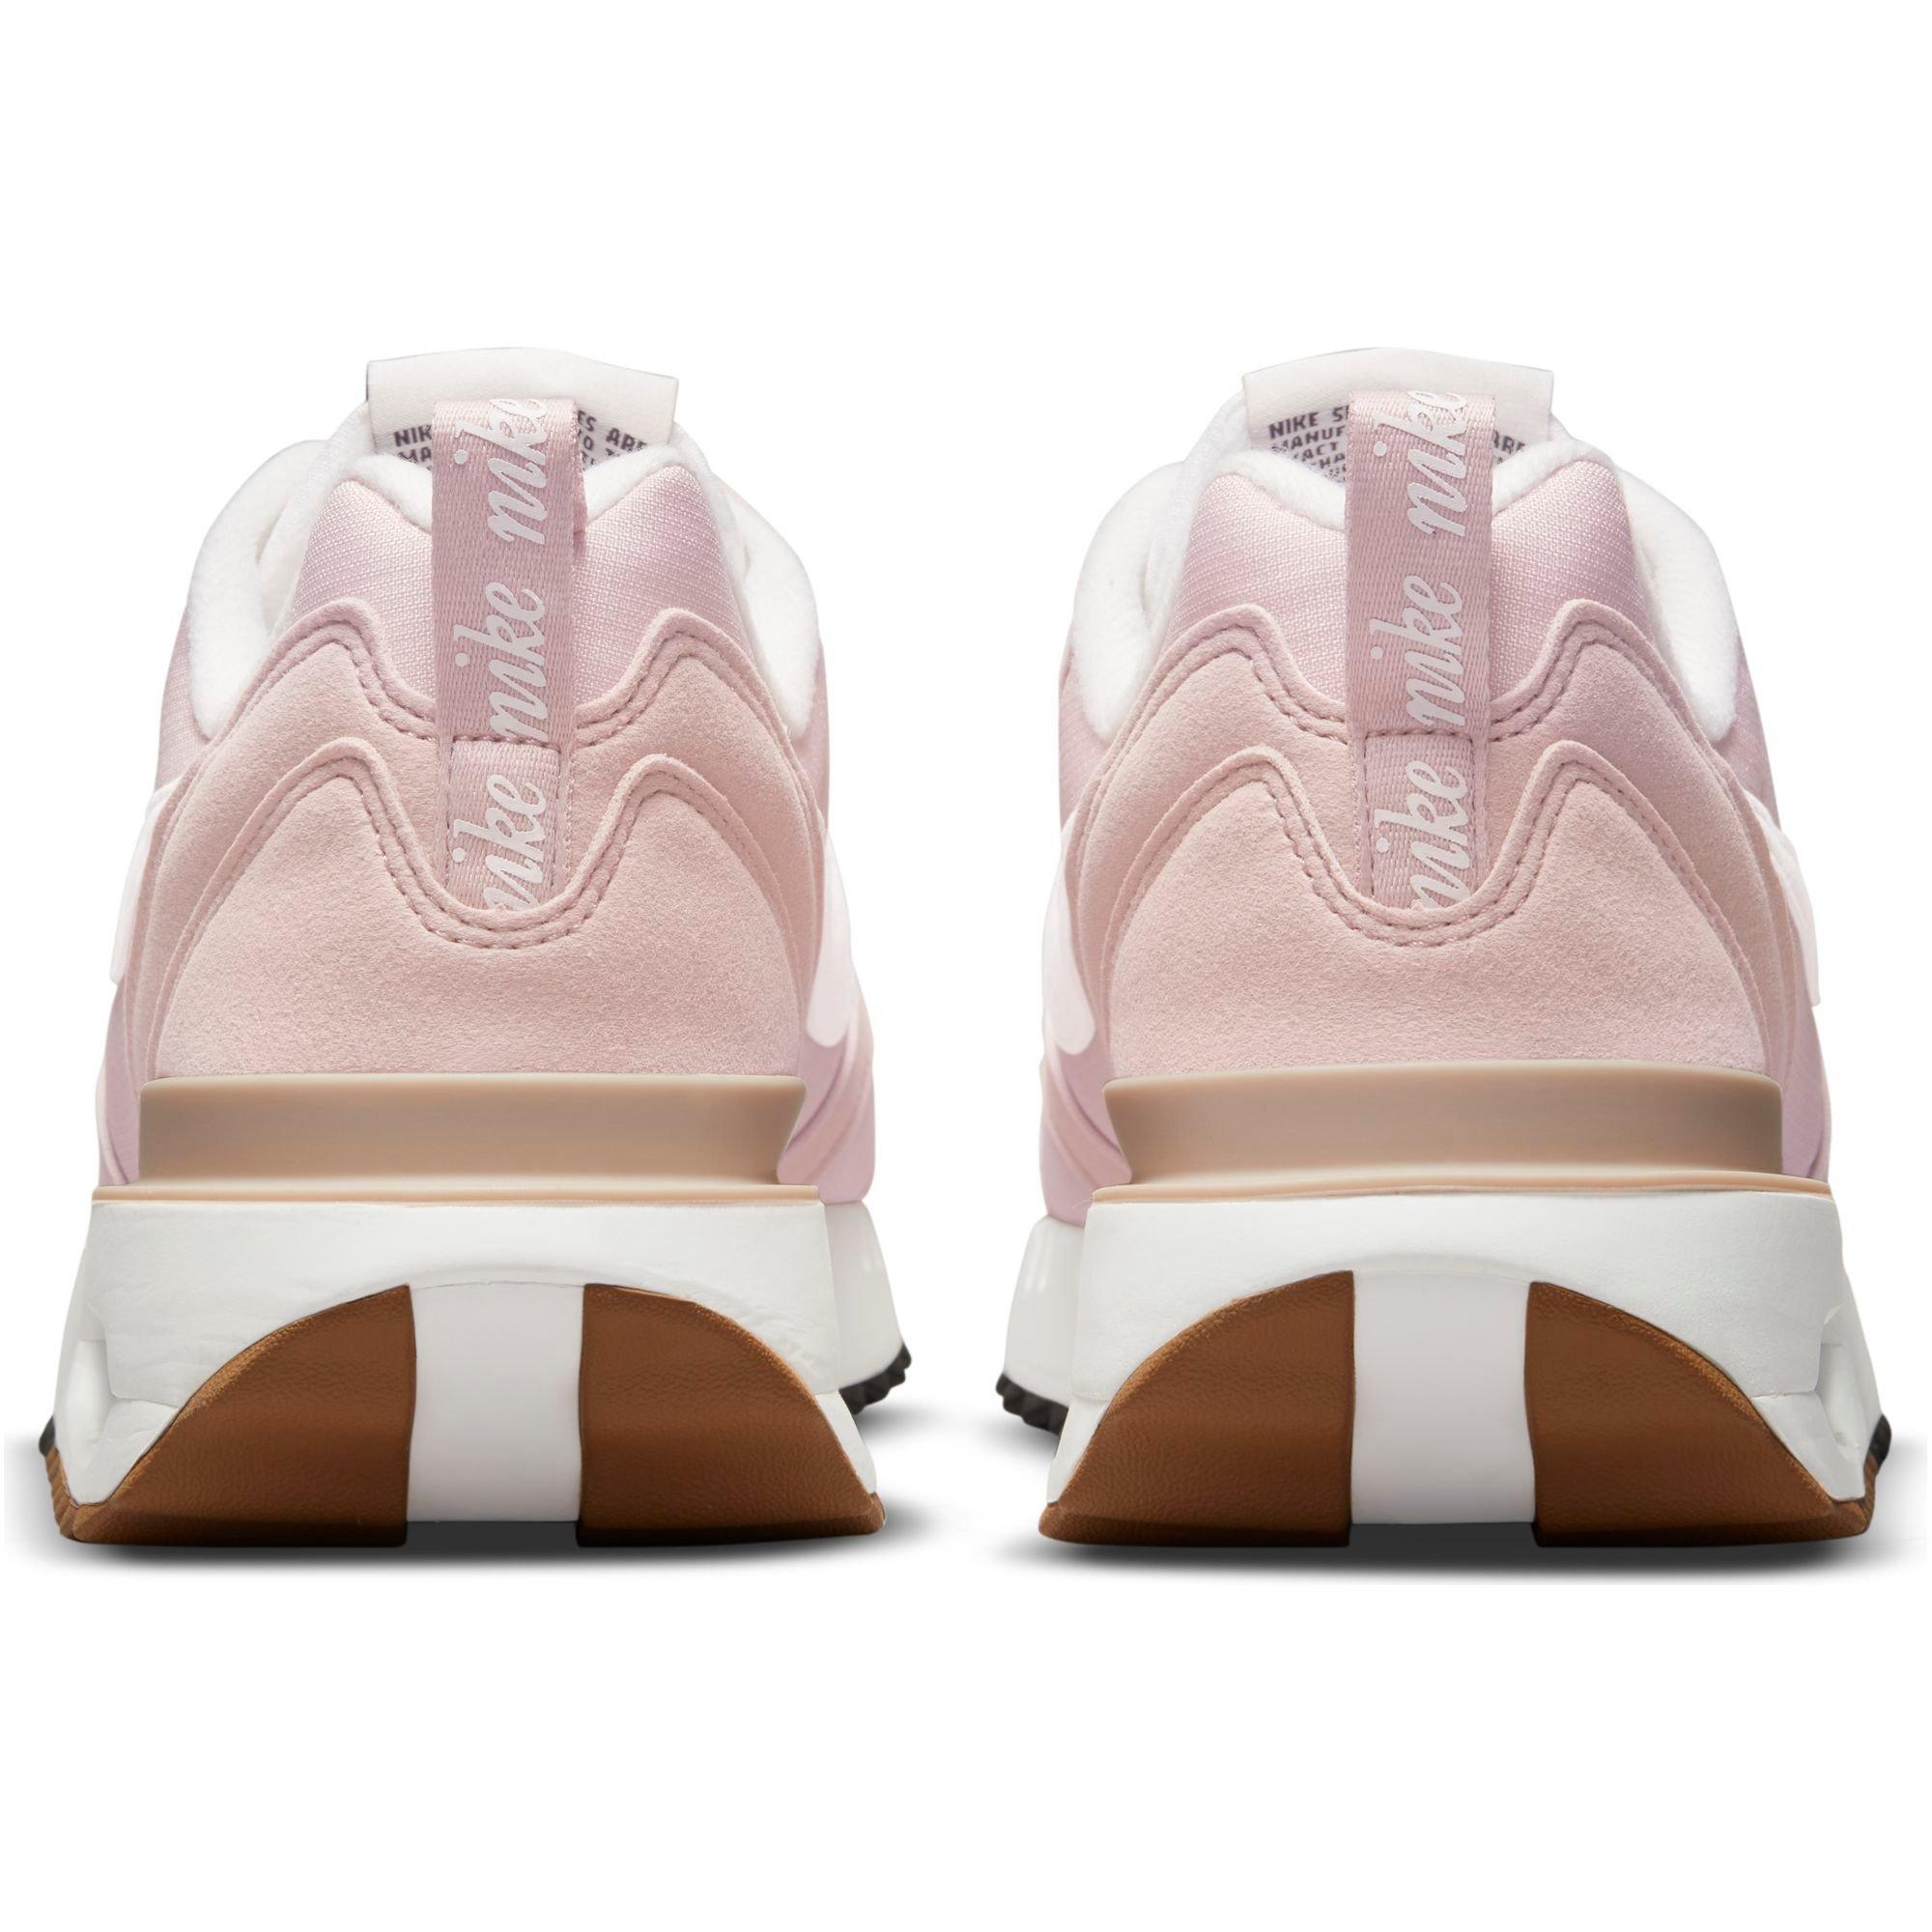 Doe herleven muis of rat Positief Nike Air Max Dawn "Pink Oxford/Summit White/Black" Women's Shoe